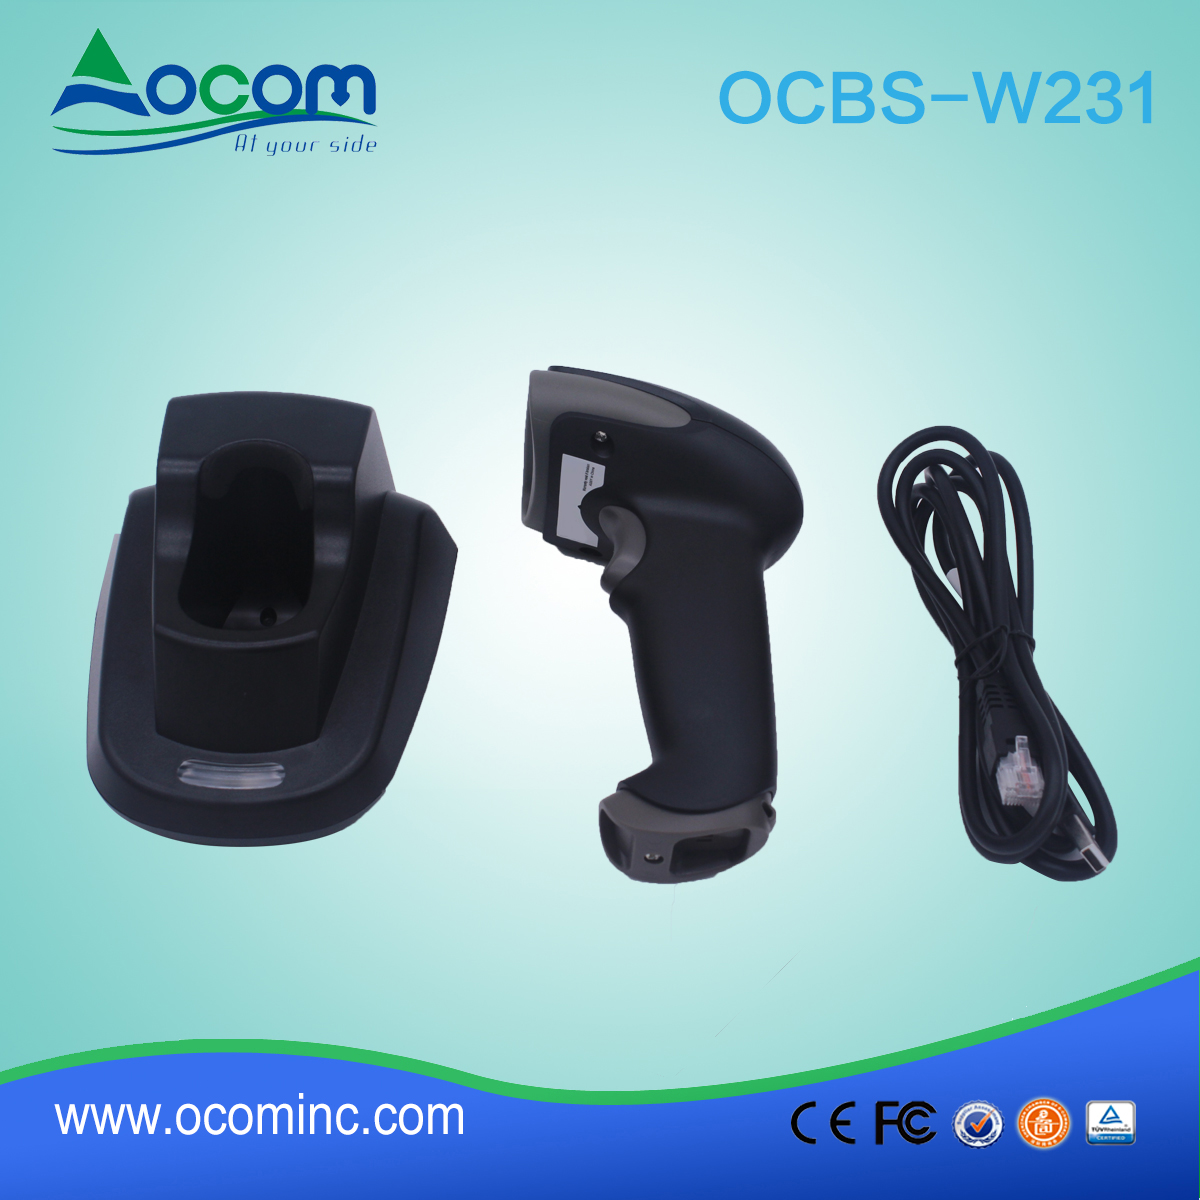 (OCBS-W231) Palmare 433MHz wireless Barcode scanner 2D con culla